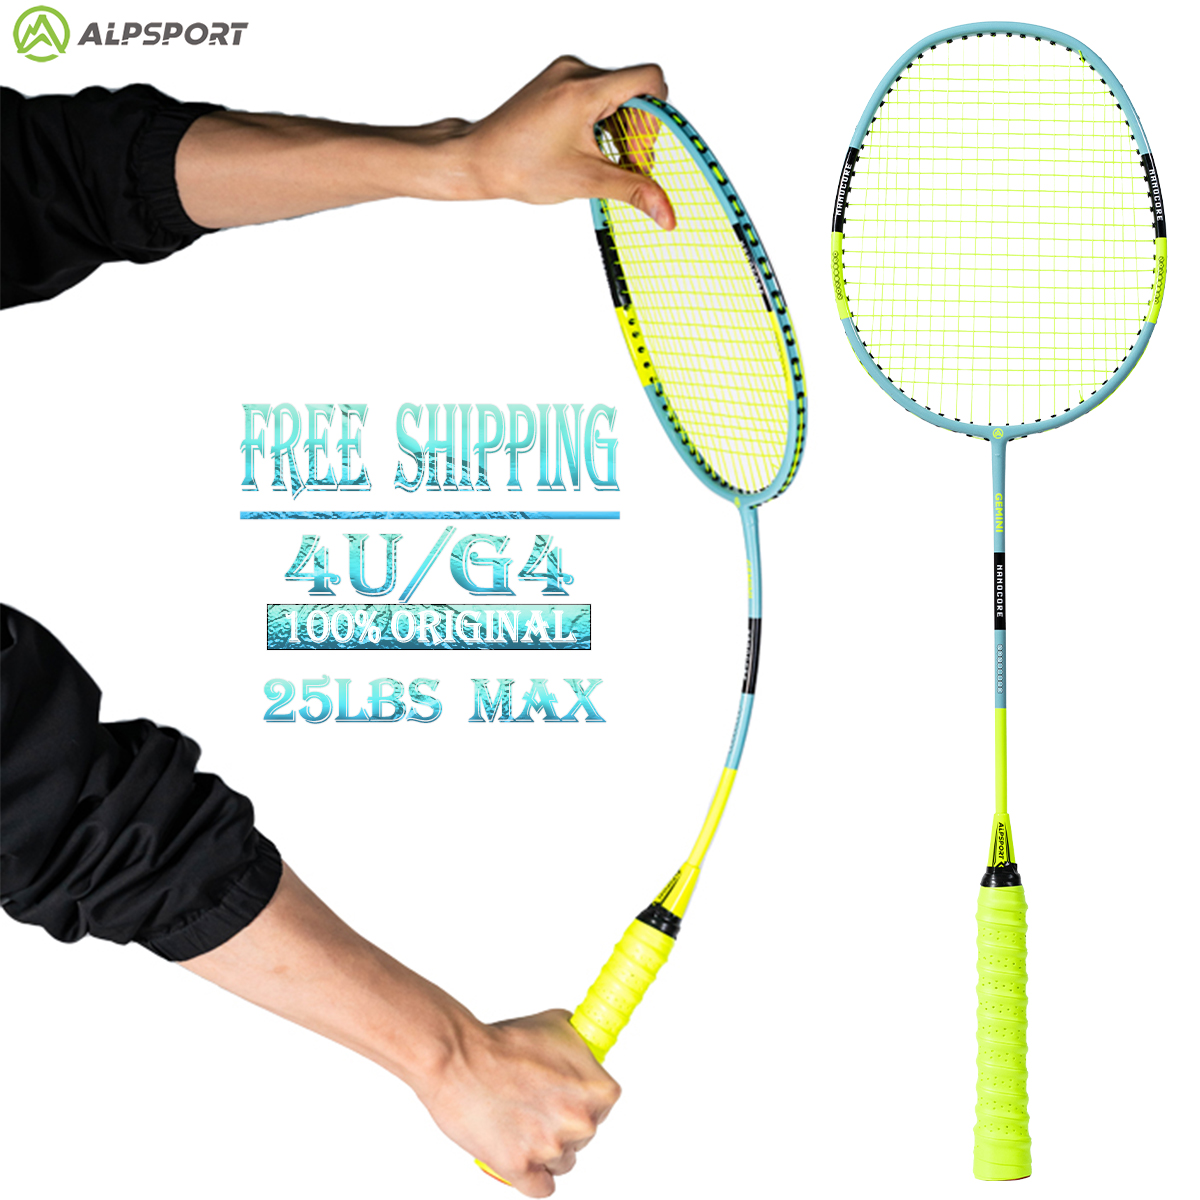 Alpsport szz100 11kg 4U professional carbon fiber badminton racket single